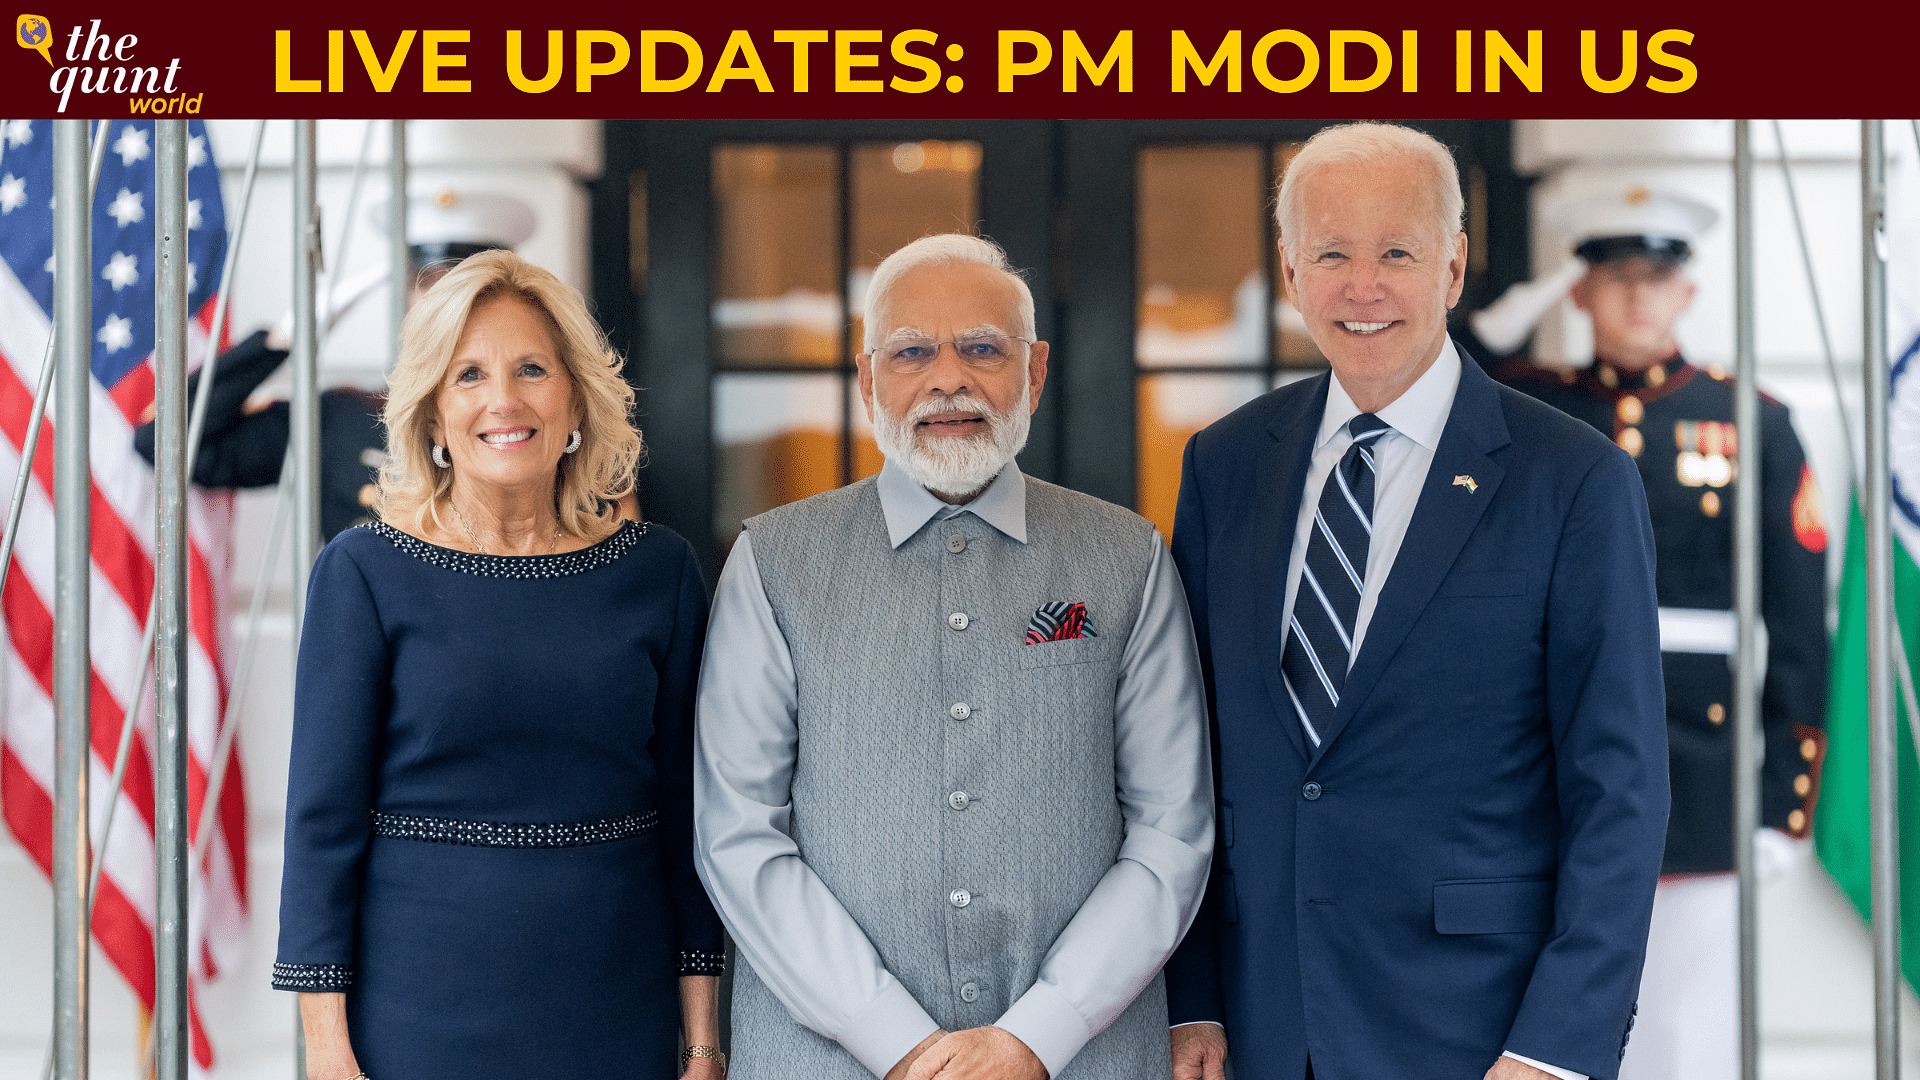 <div class="paragraphs"><p>PM Narendra Modi in US LIVE Updates</p></div>